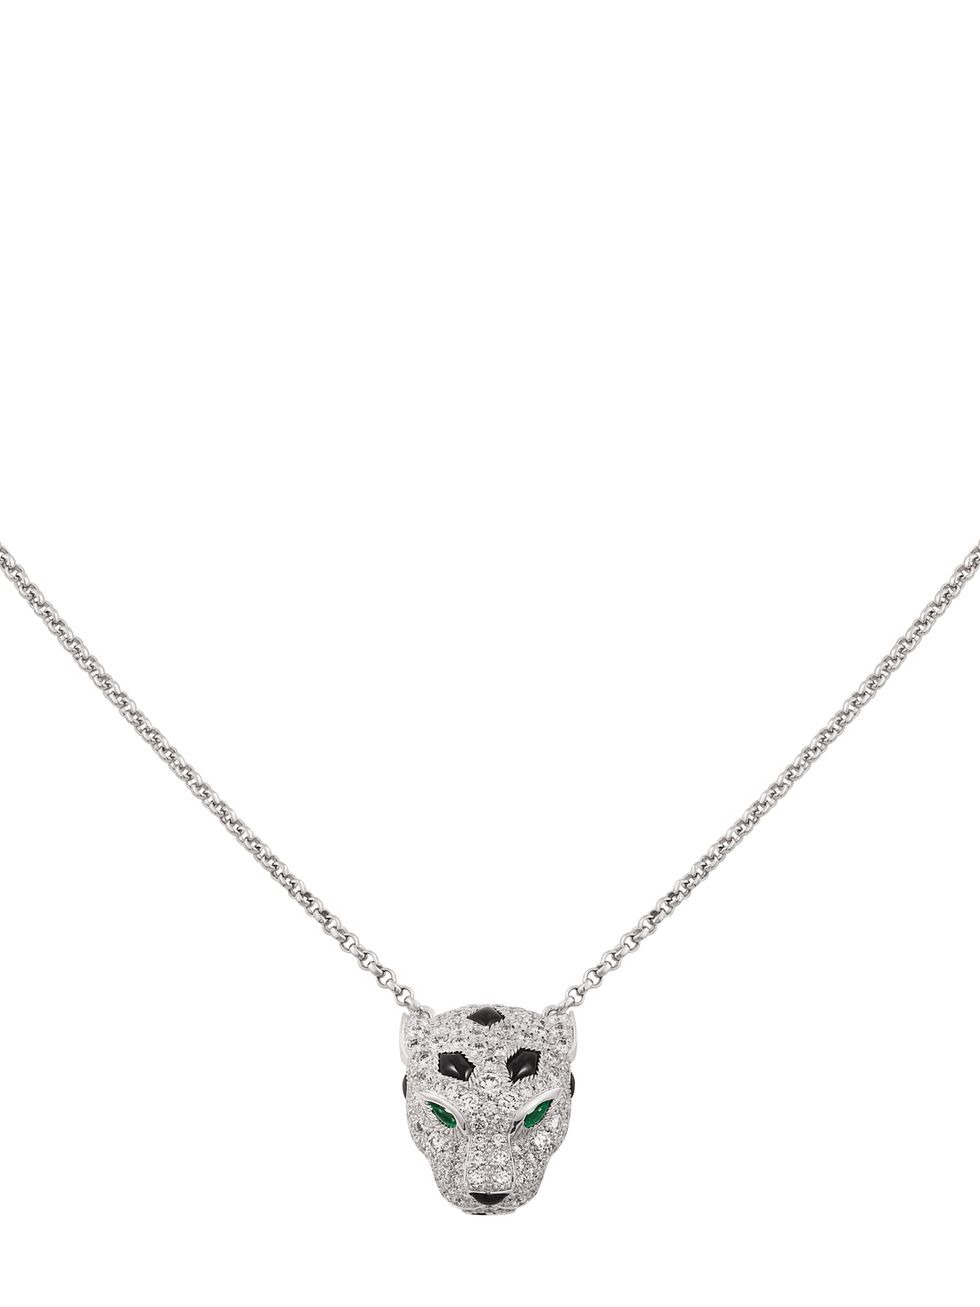 panthère de cartier necklace, 18k white gold, onyx, set with 2 emeralds and 135 brilliant cut diamonds totaling 114 carat